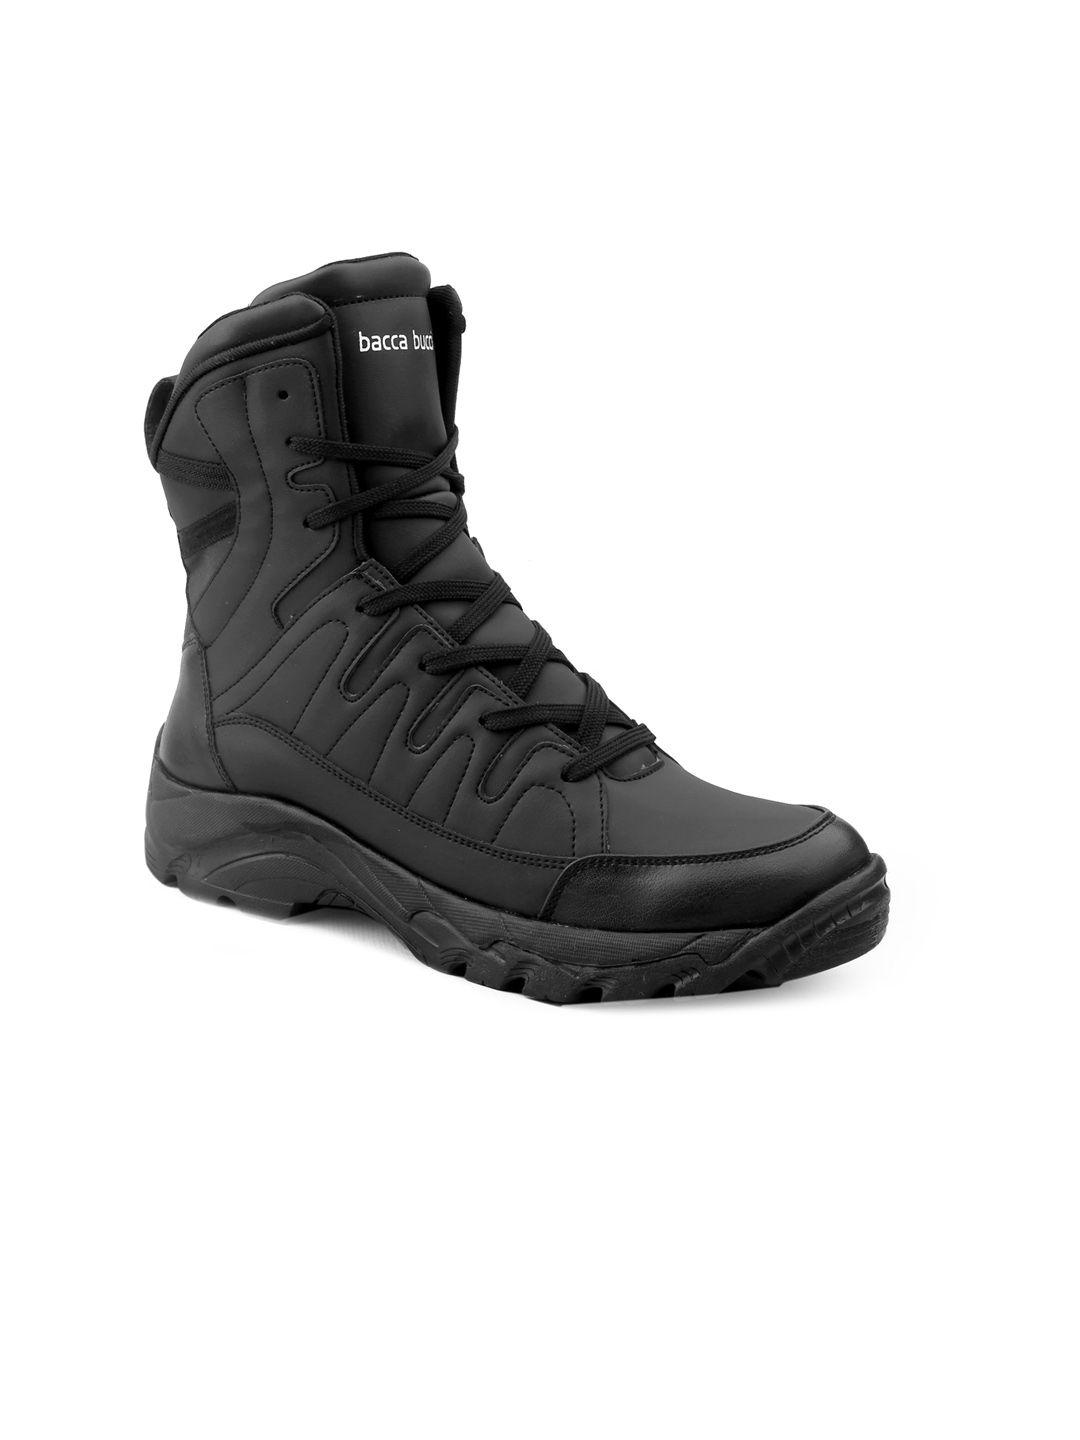 bacca bucci men textured mid top flatform-heel hiking boots